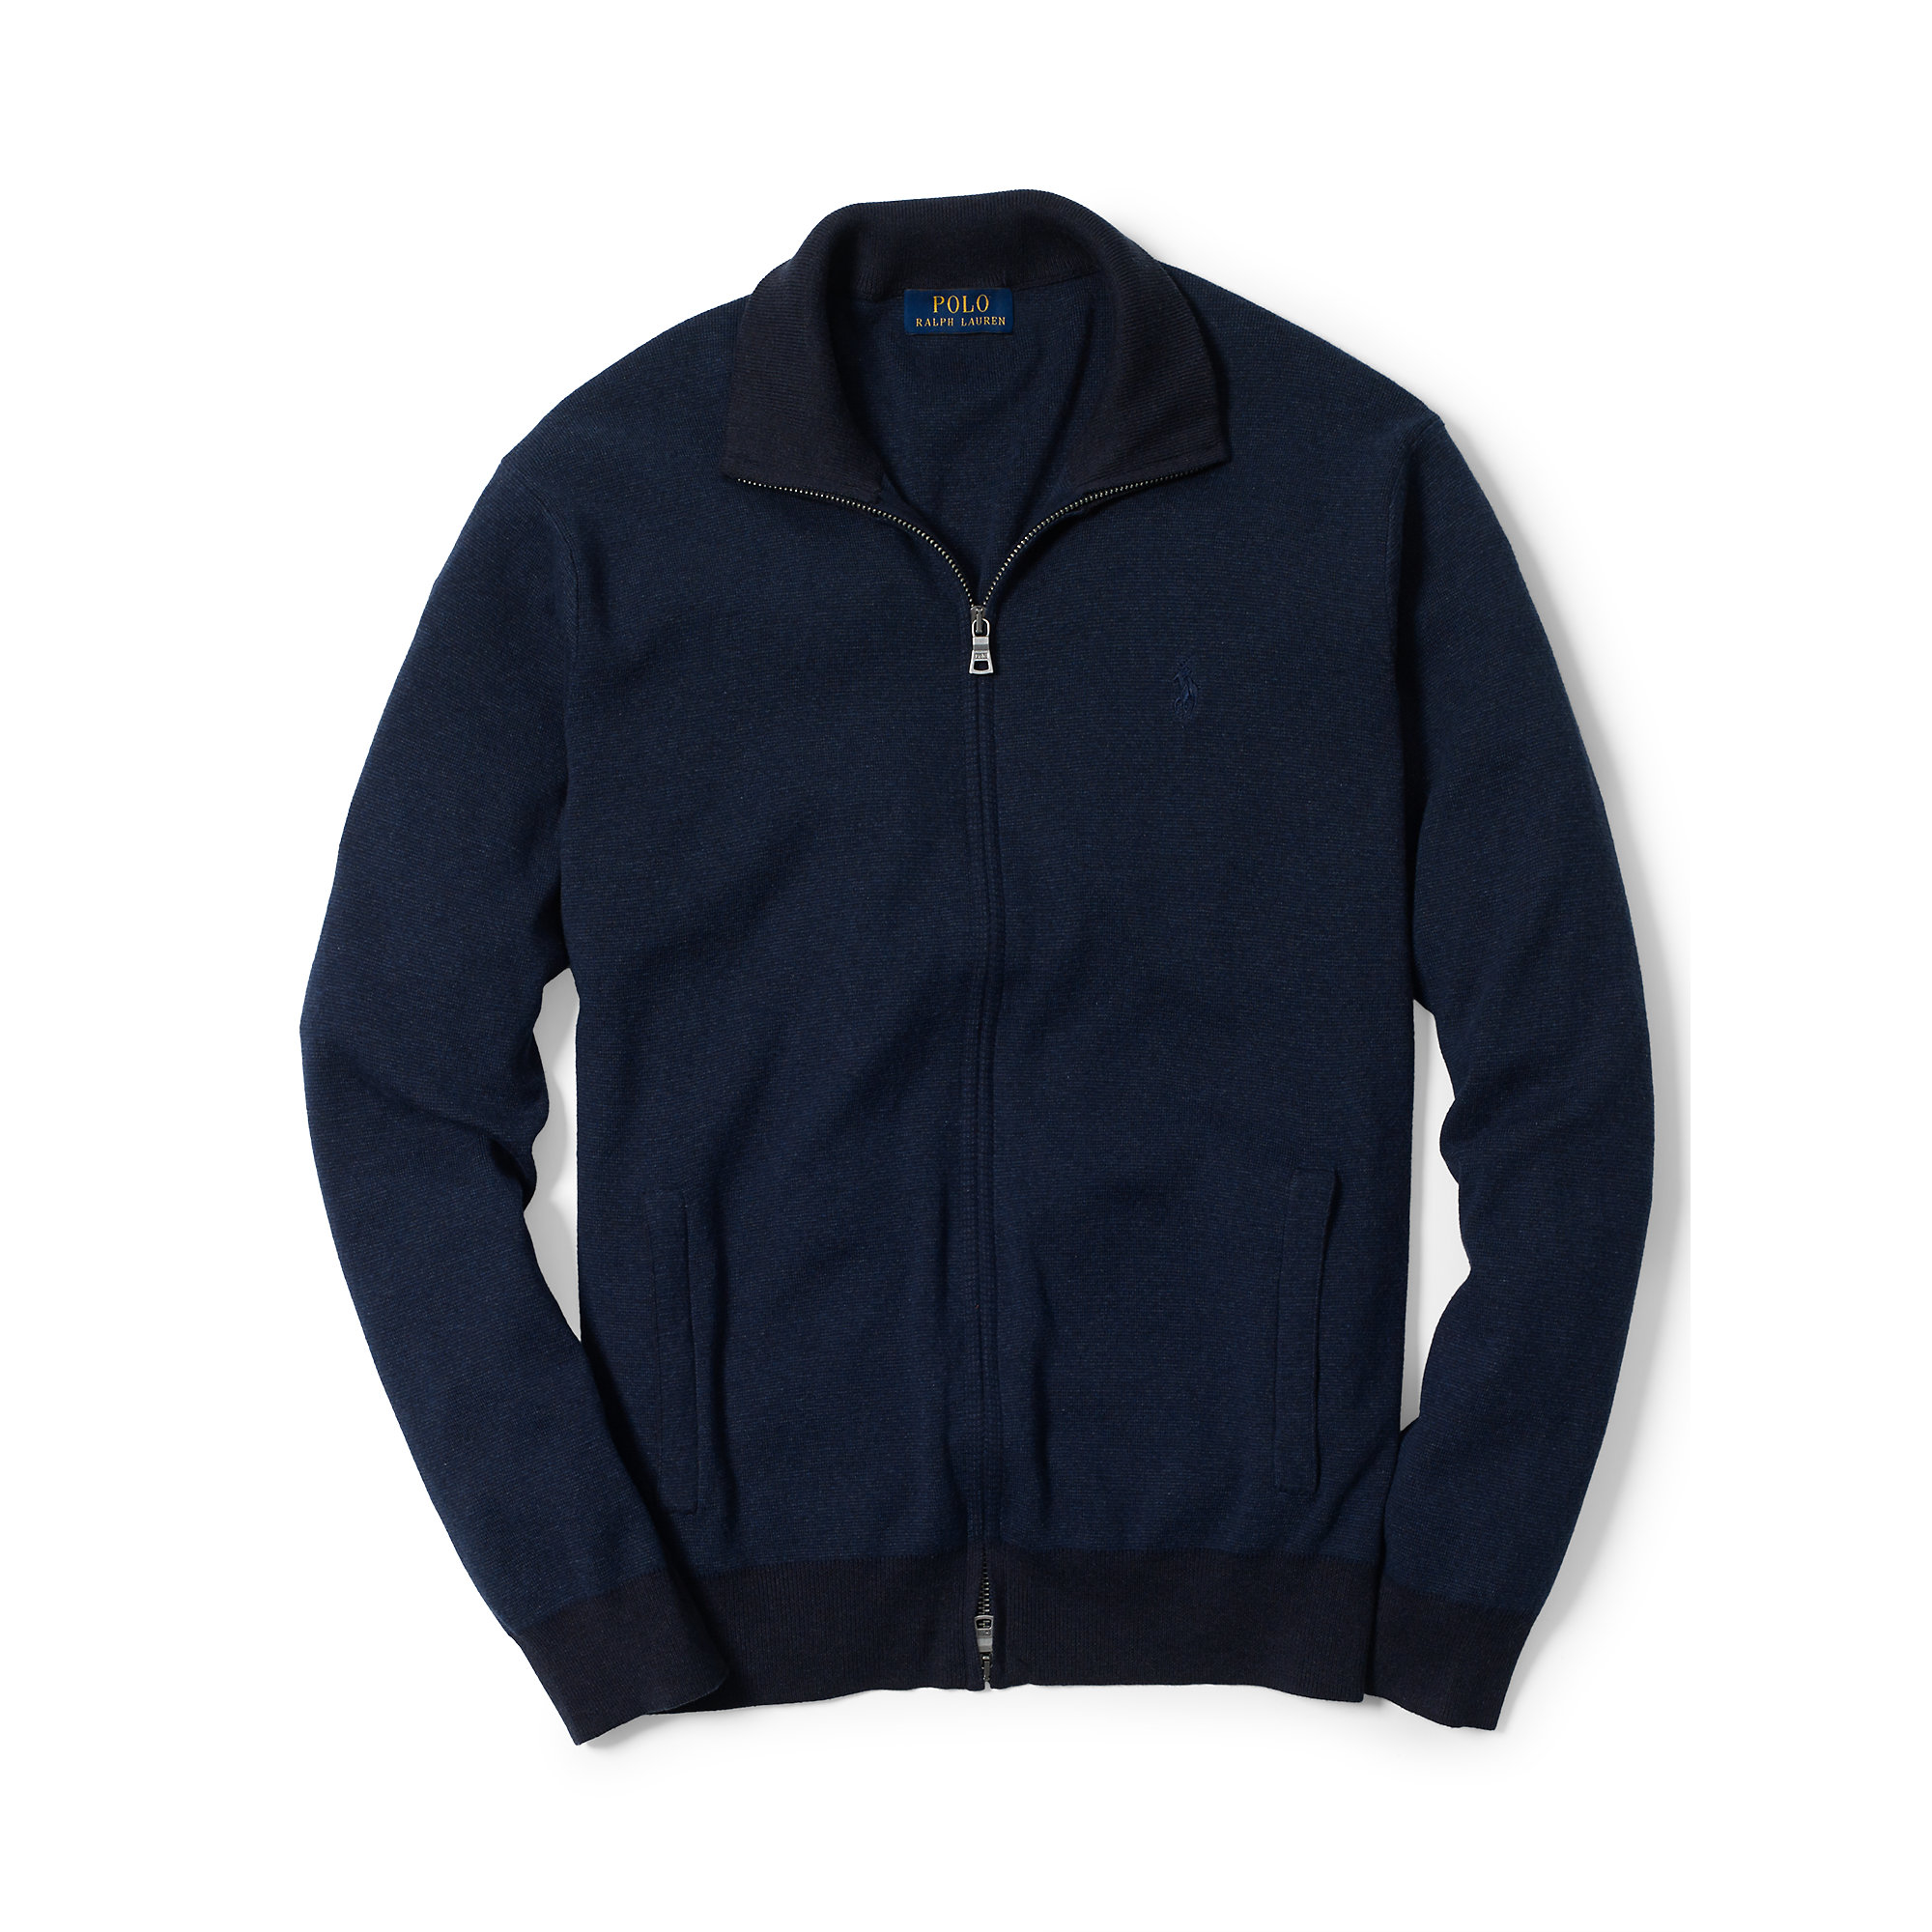 Lyst - Polo ralph lauren Pima Cotton Full-zip Sweater in Blue for Men